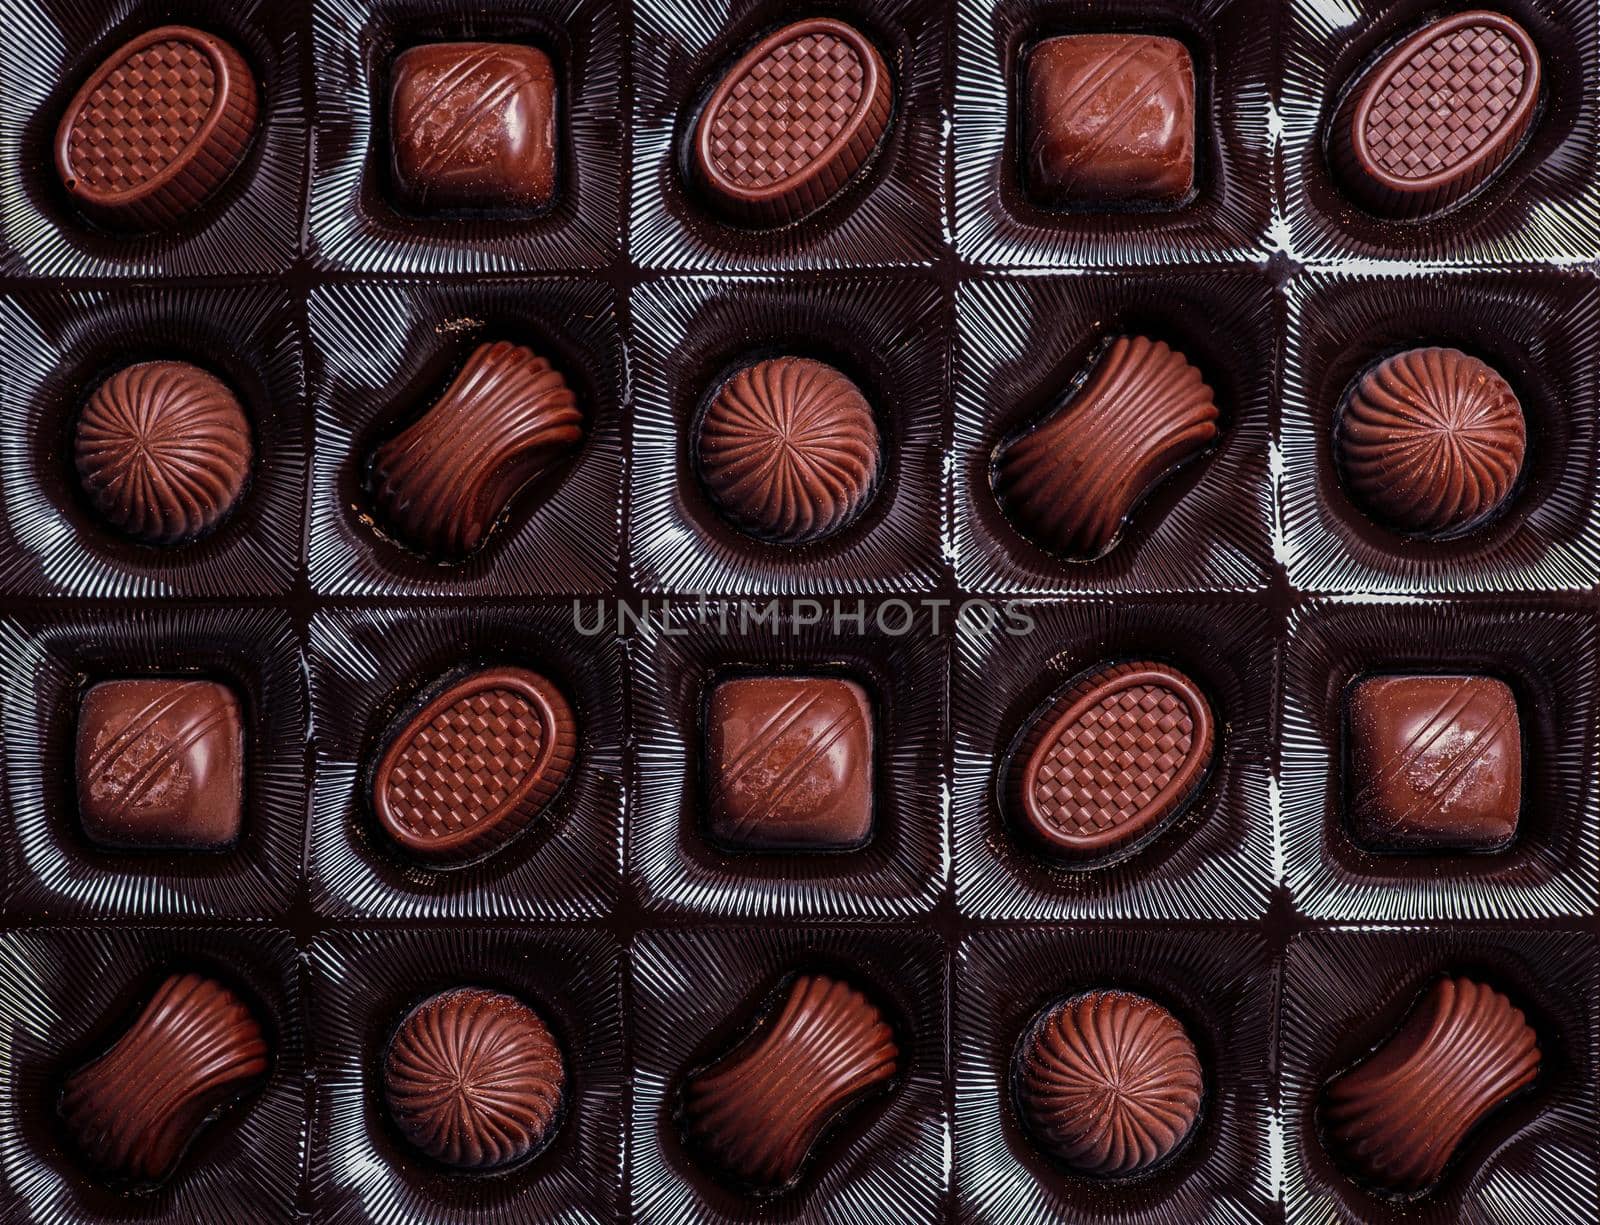 box of chocolates taken out of the fridge